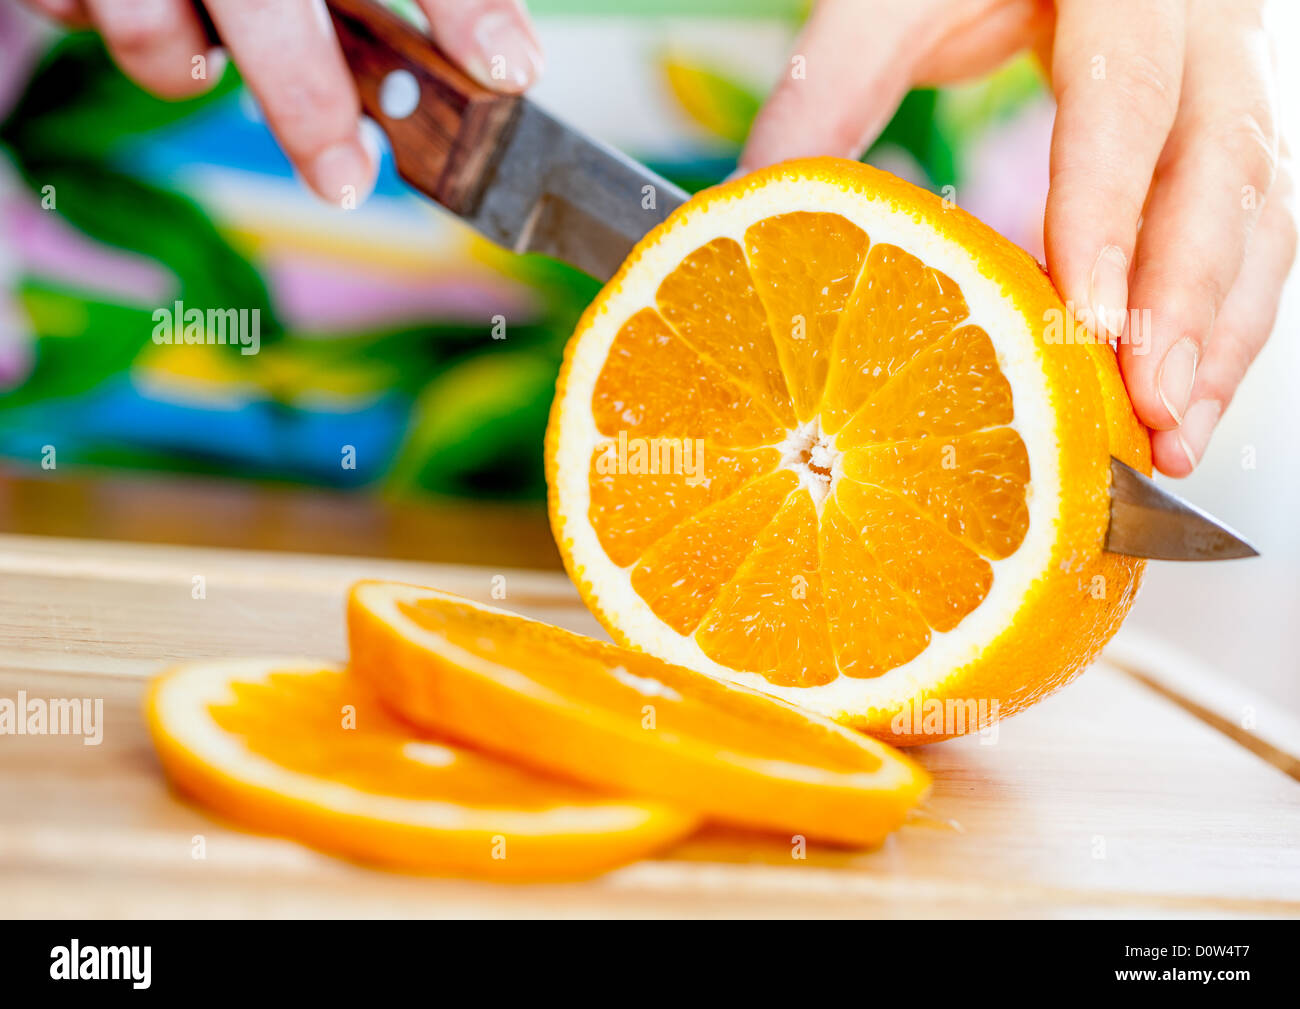 Woman's hands cutting orange Stock Photo